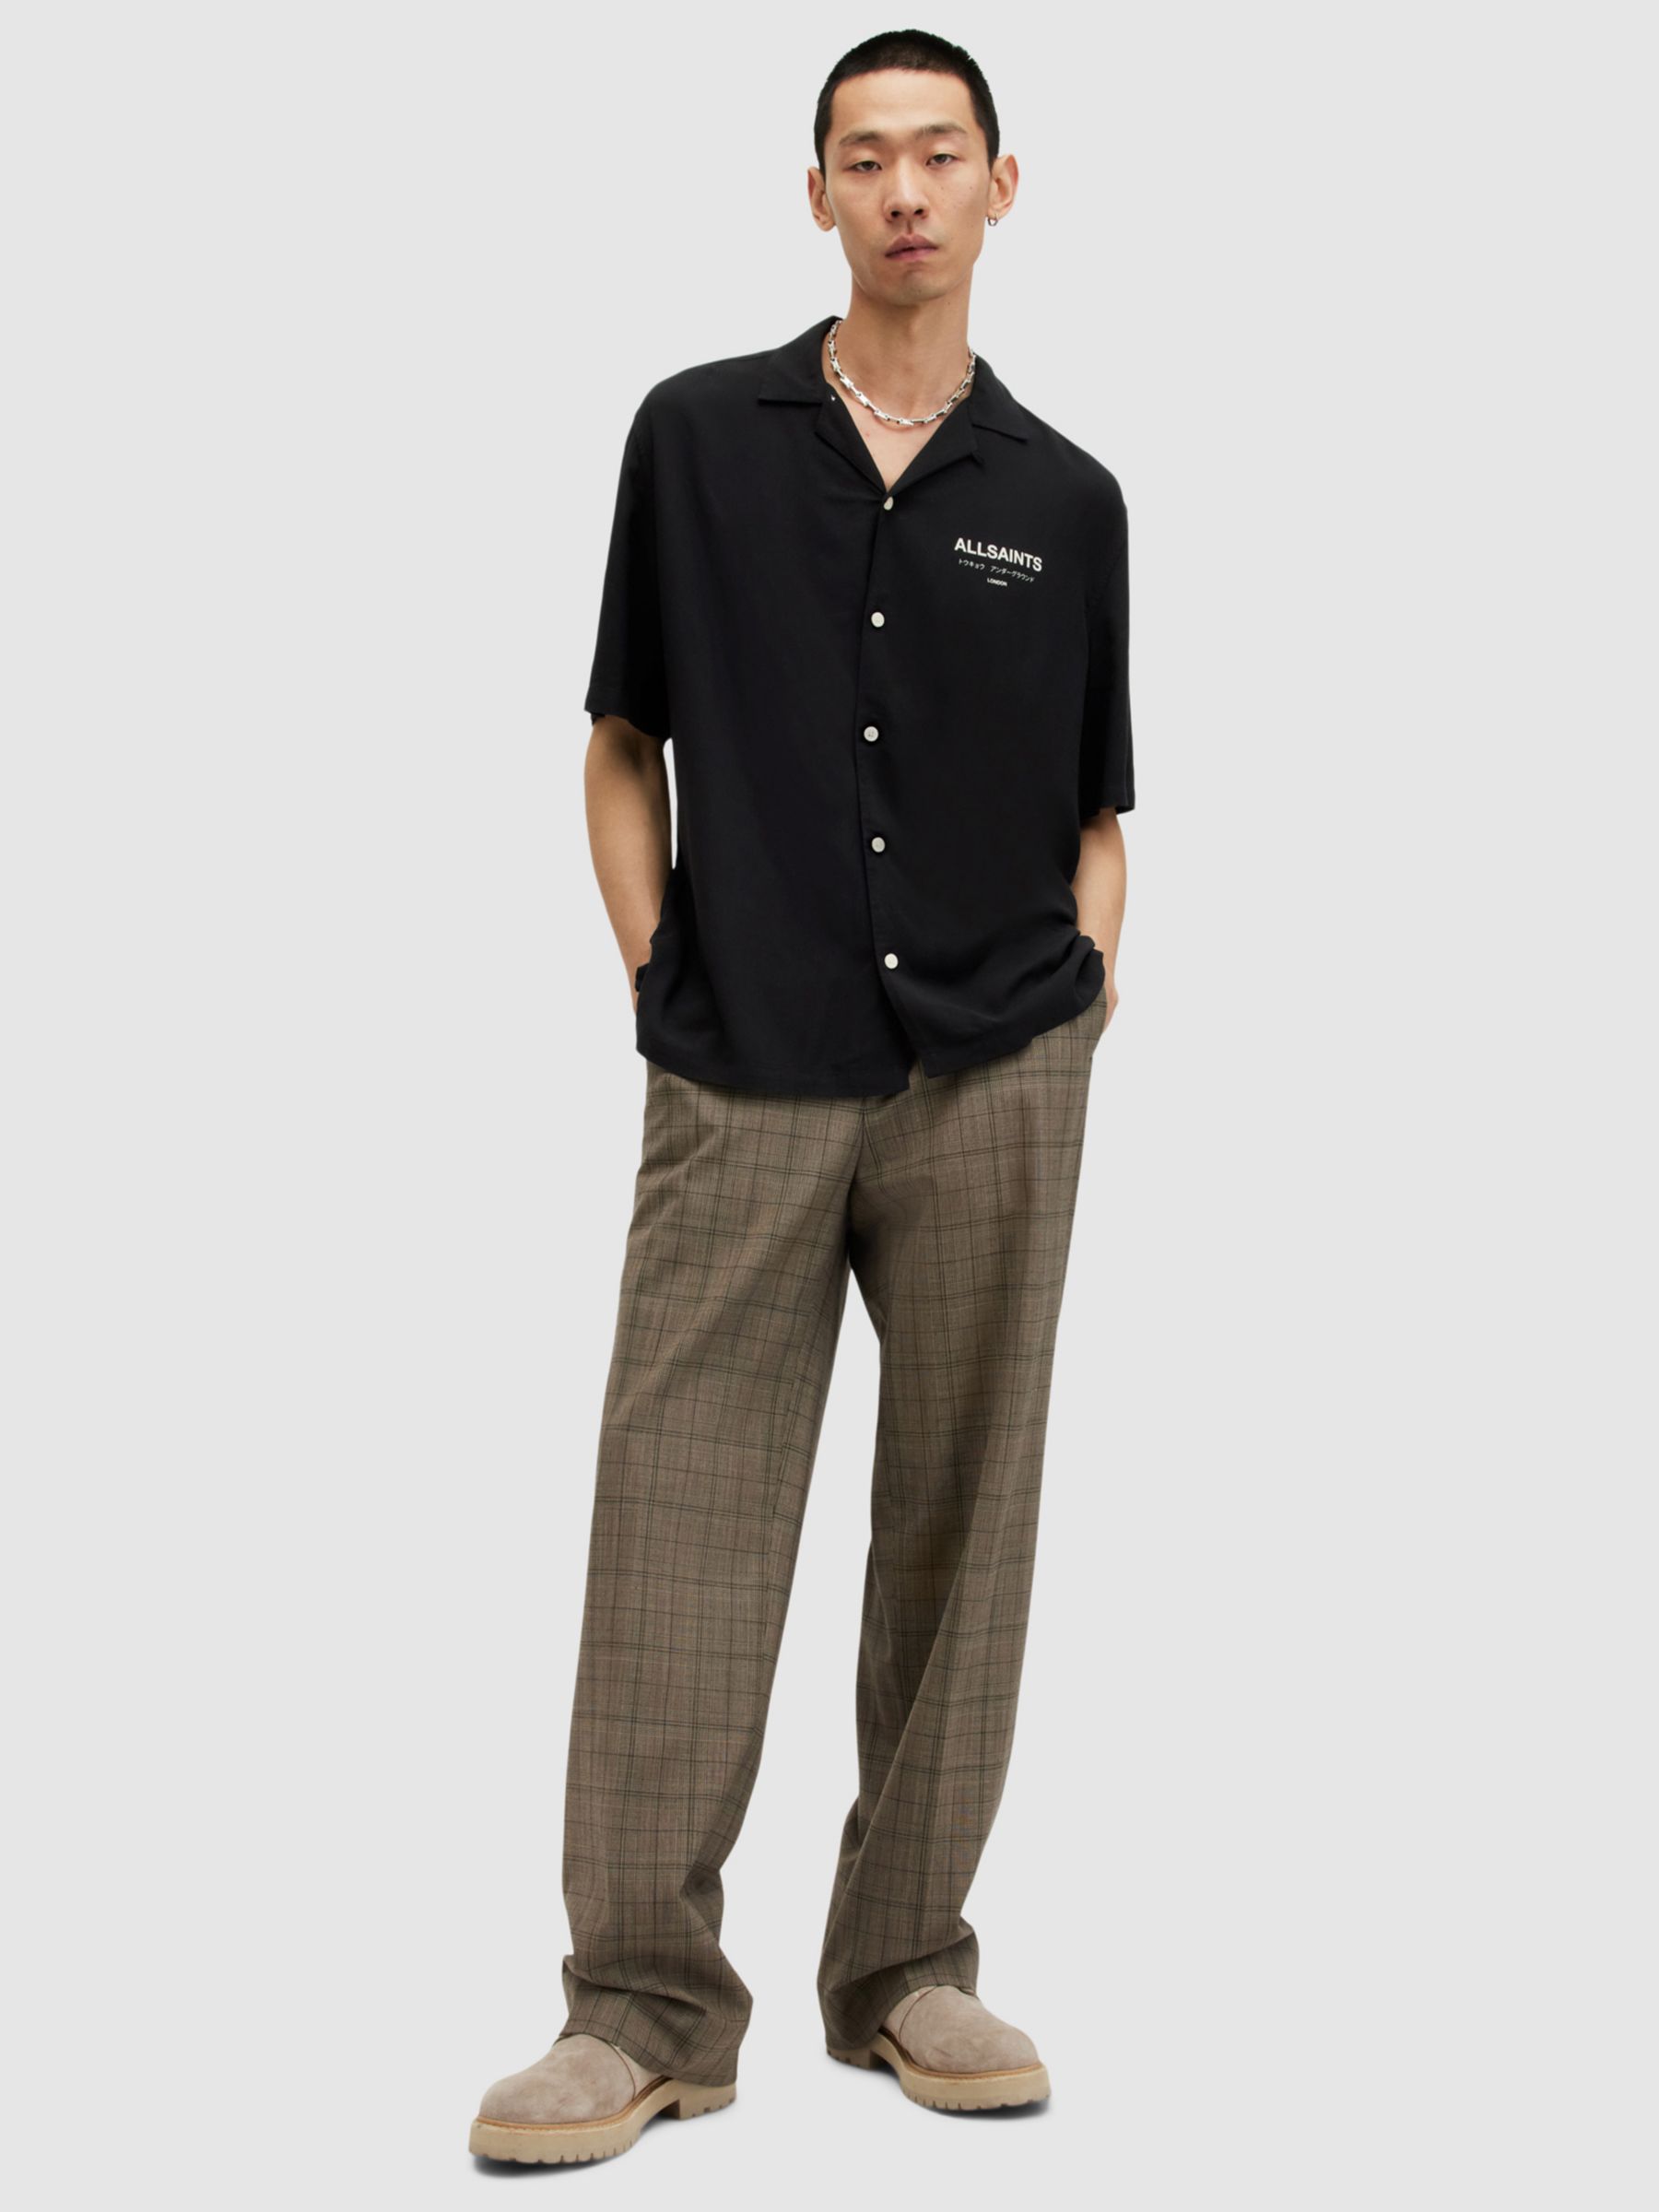 AllSaints Underground Short Sleeve Revere Collar Shirt, Jet Black/Ecru, XS